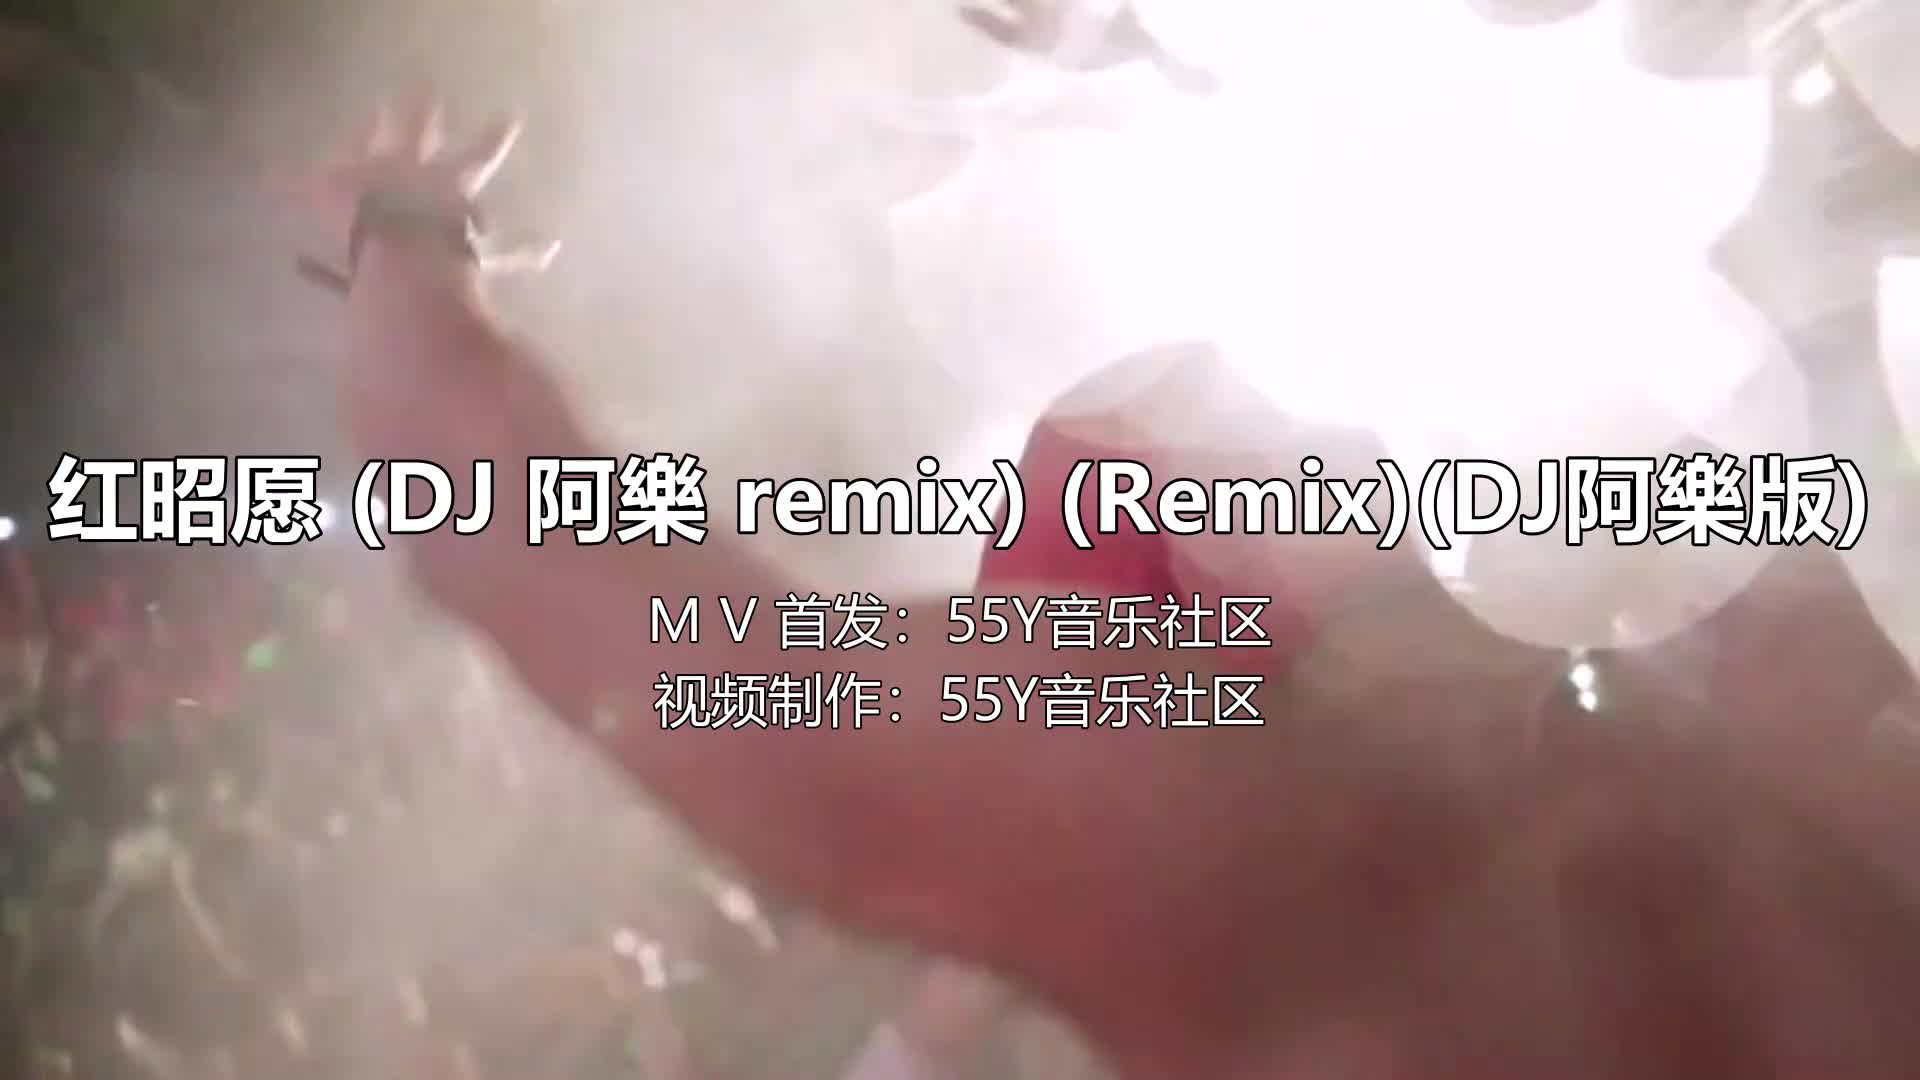 DJ阿樂 - 红昭愿 (Remix)